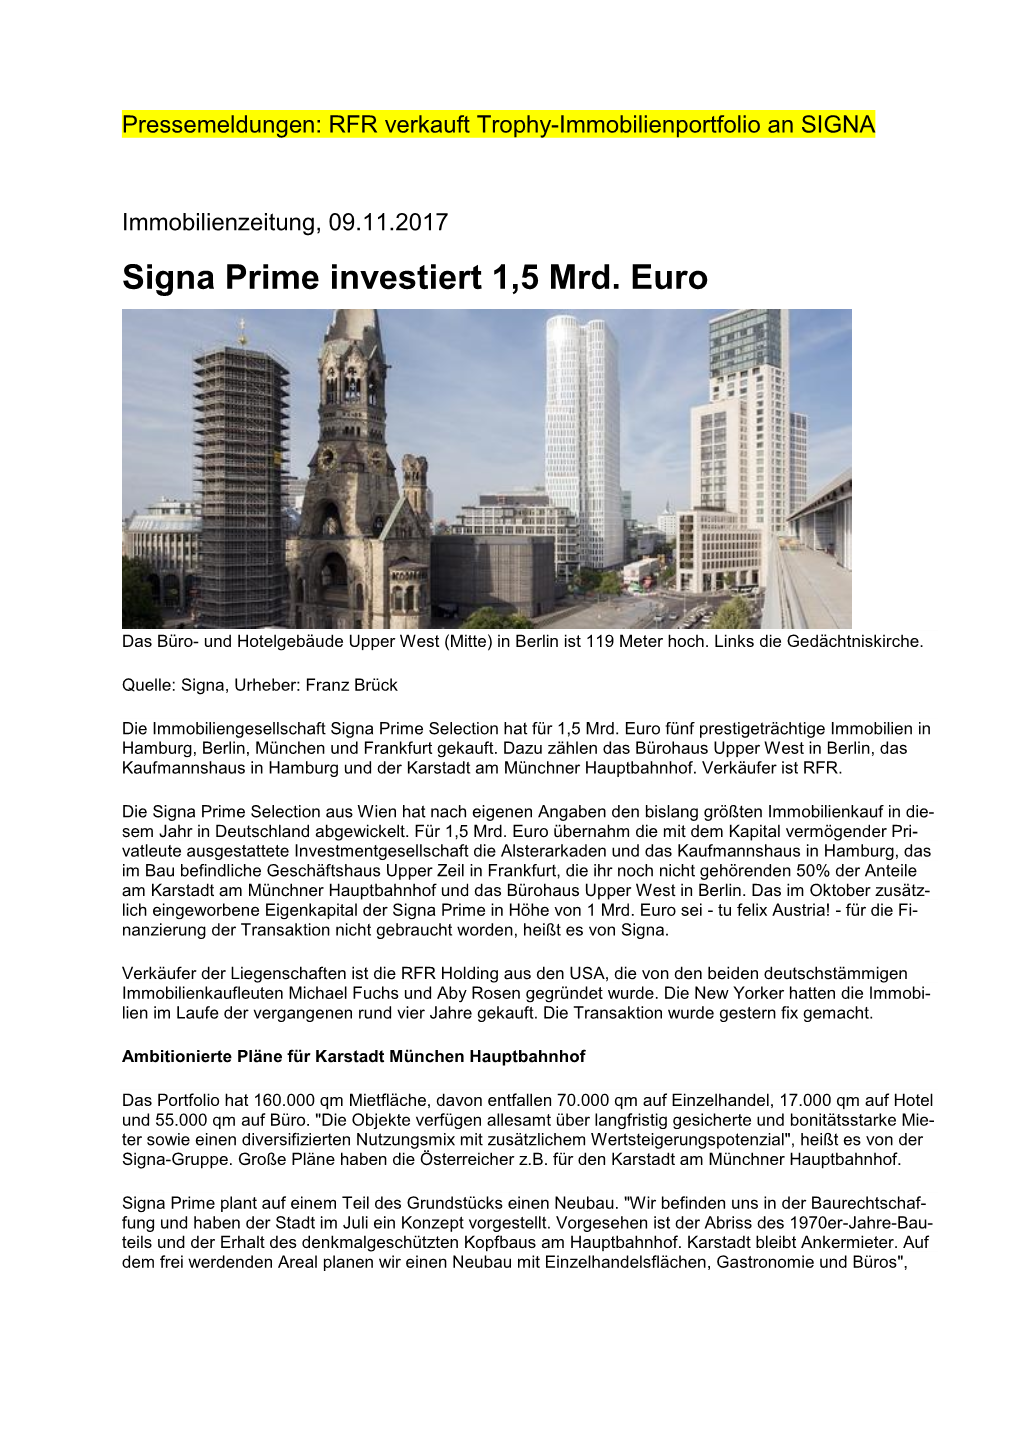 Signa Prime Investiert 1,5 Mrd. Euro